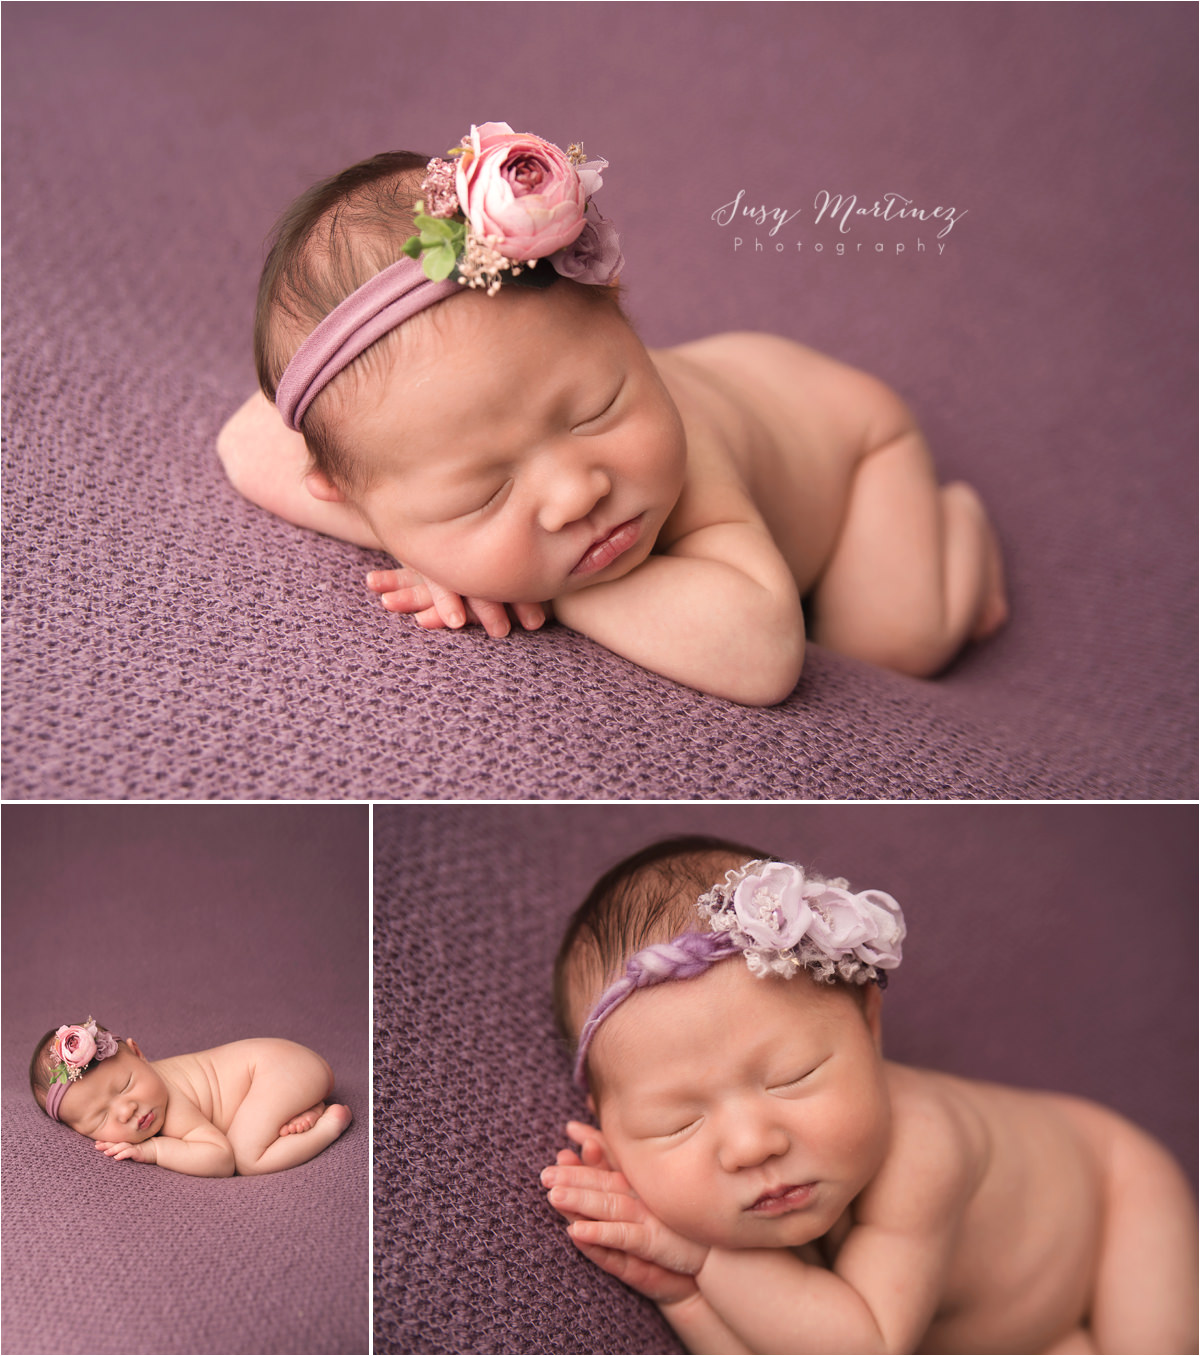 classic baby girl newborn portraits with newborn photographer Susy Martinez Photography